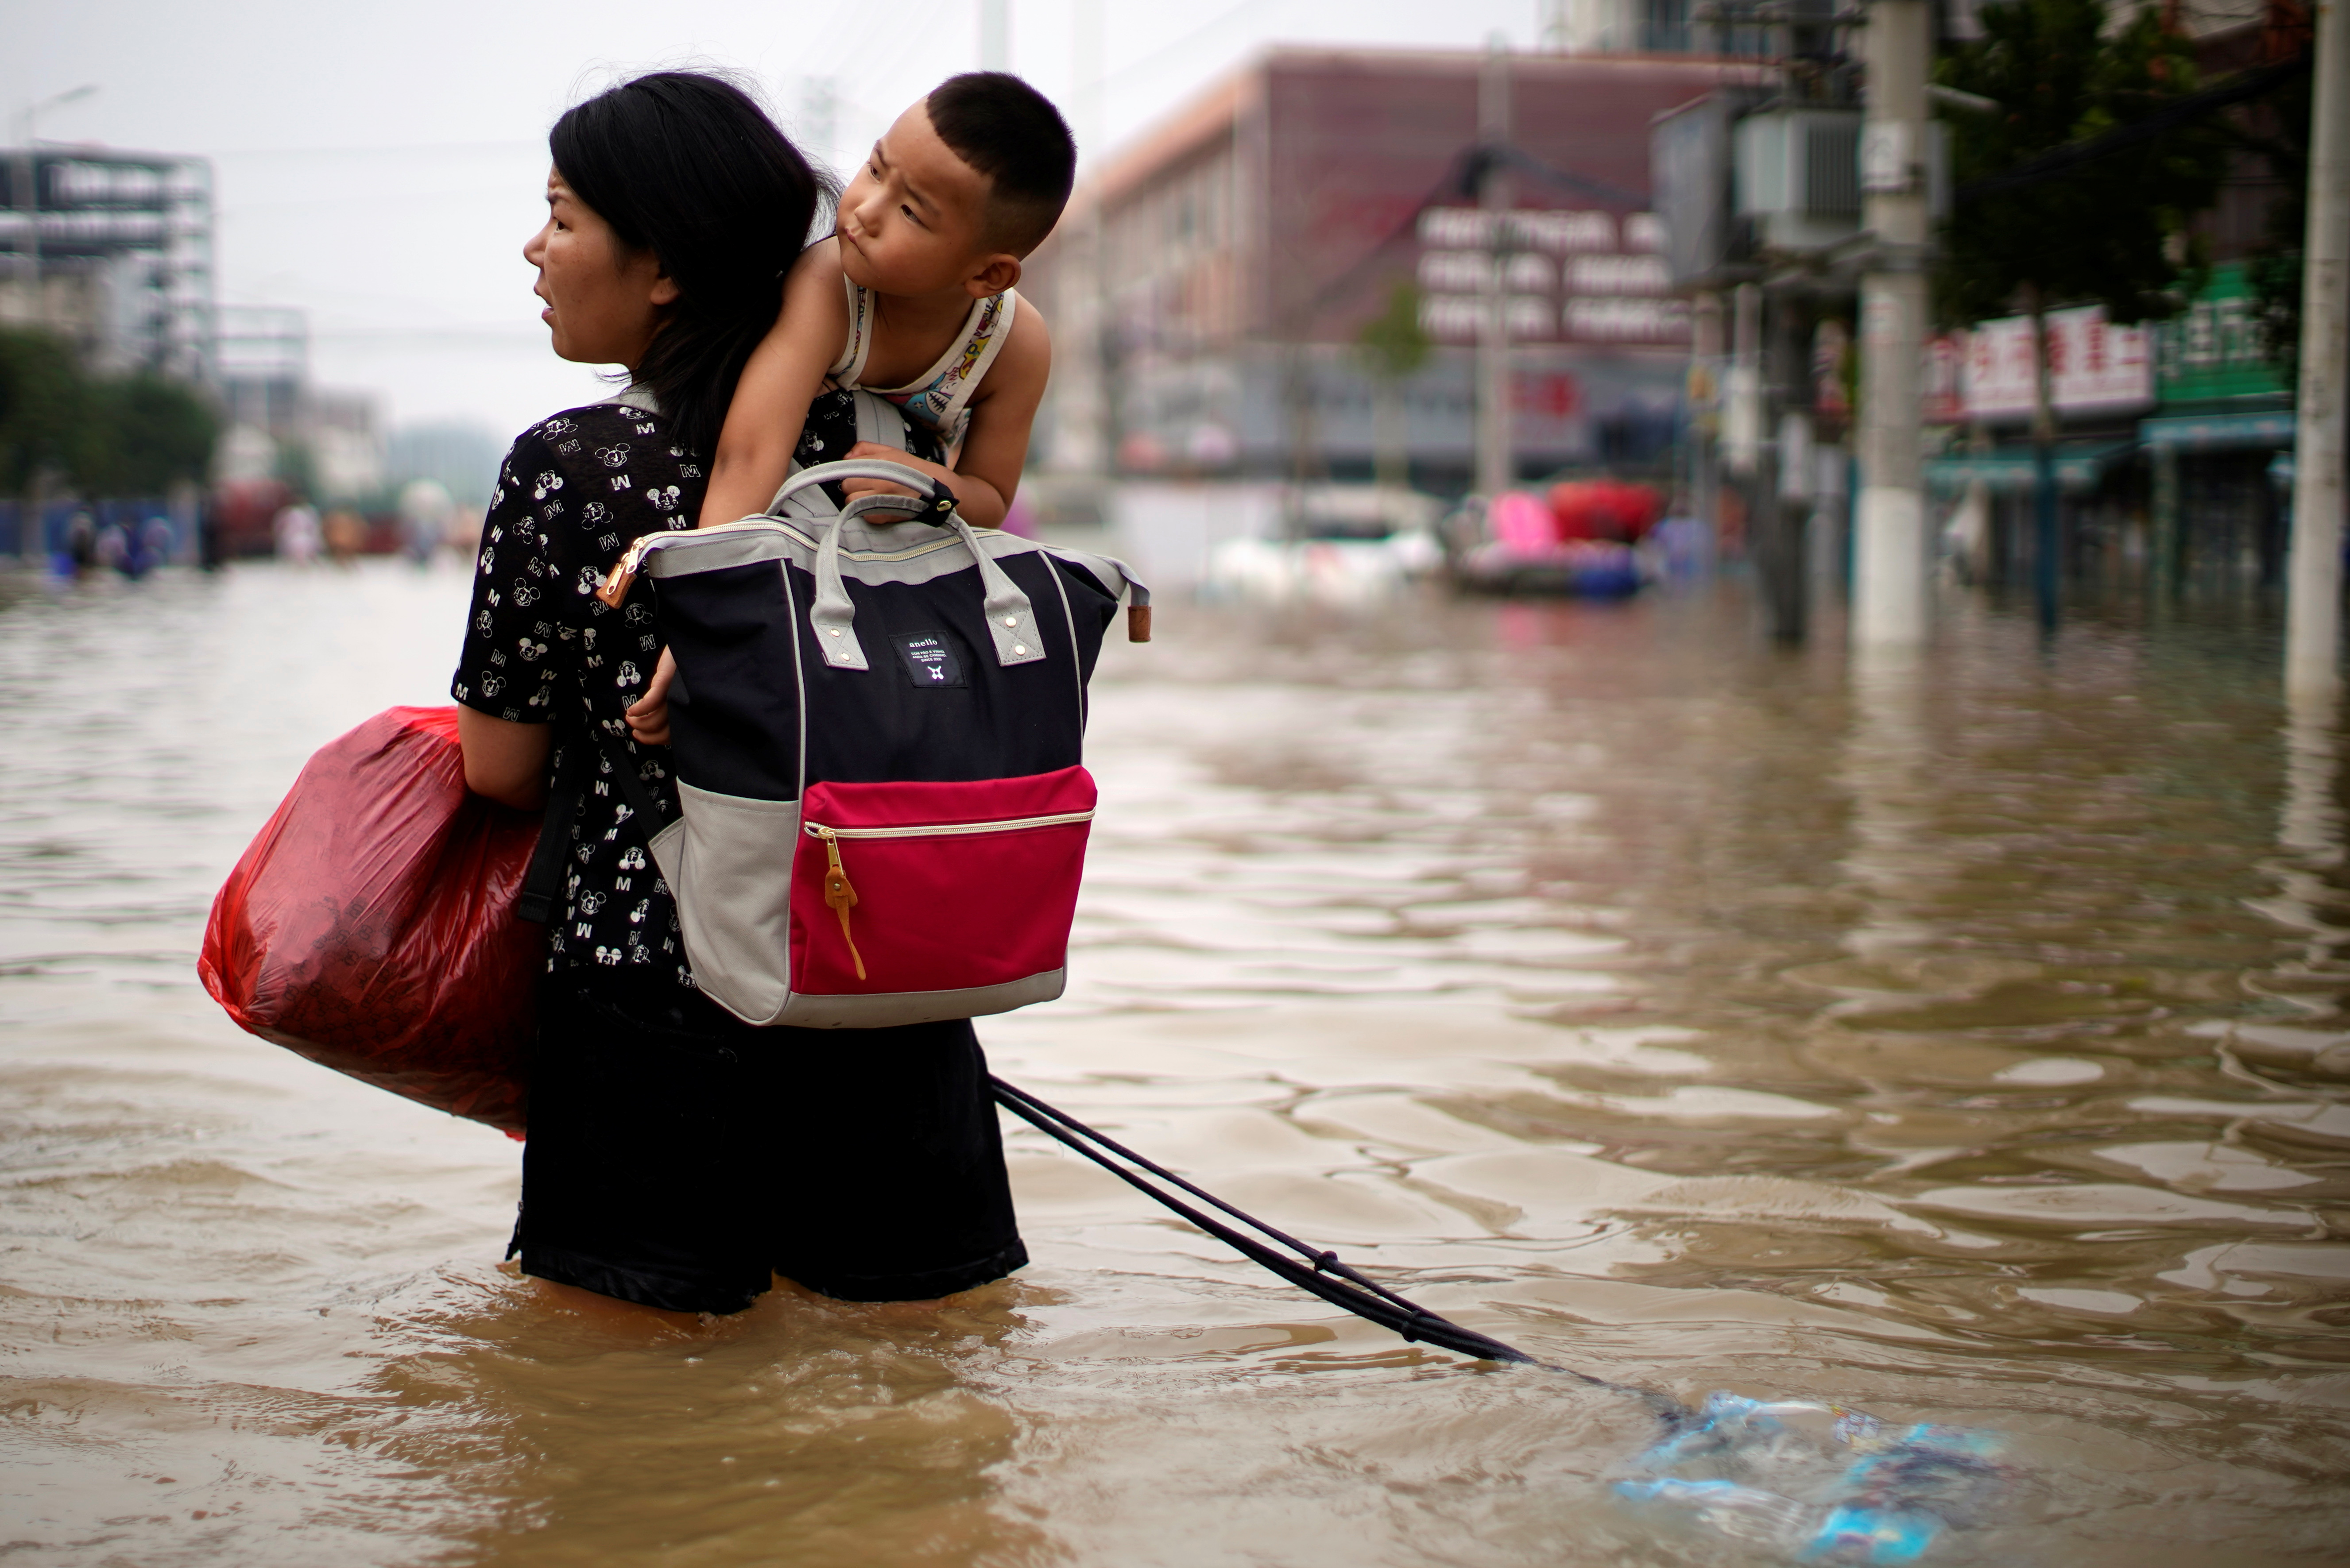 Woman carrying a child and belongings wades through floodwaters following heavy rainfall in Zhengzhou